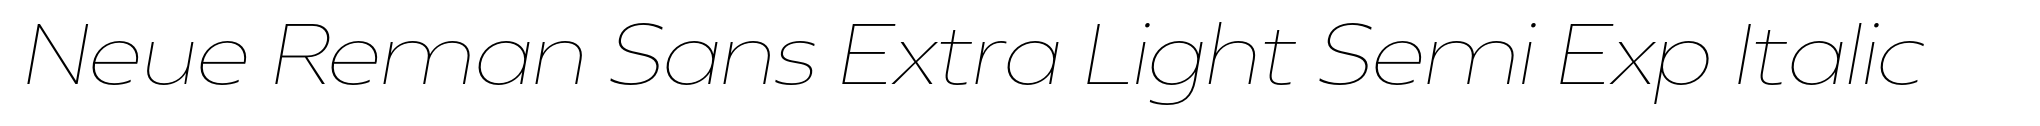 Neue Reman Sans Extra Light Semi Exp Italic image